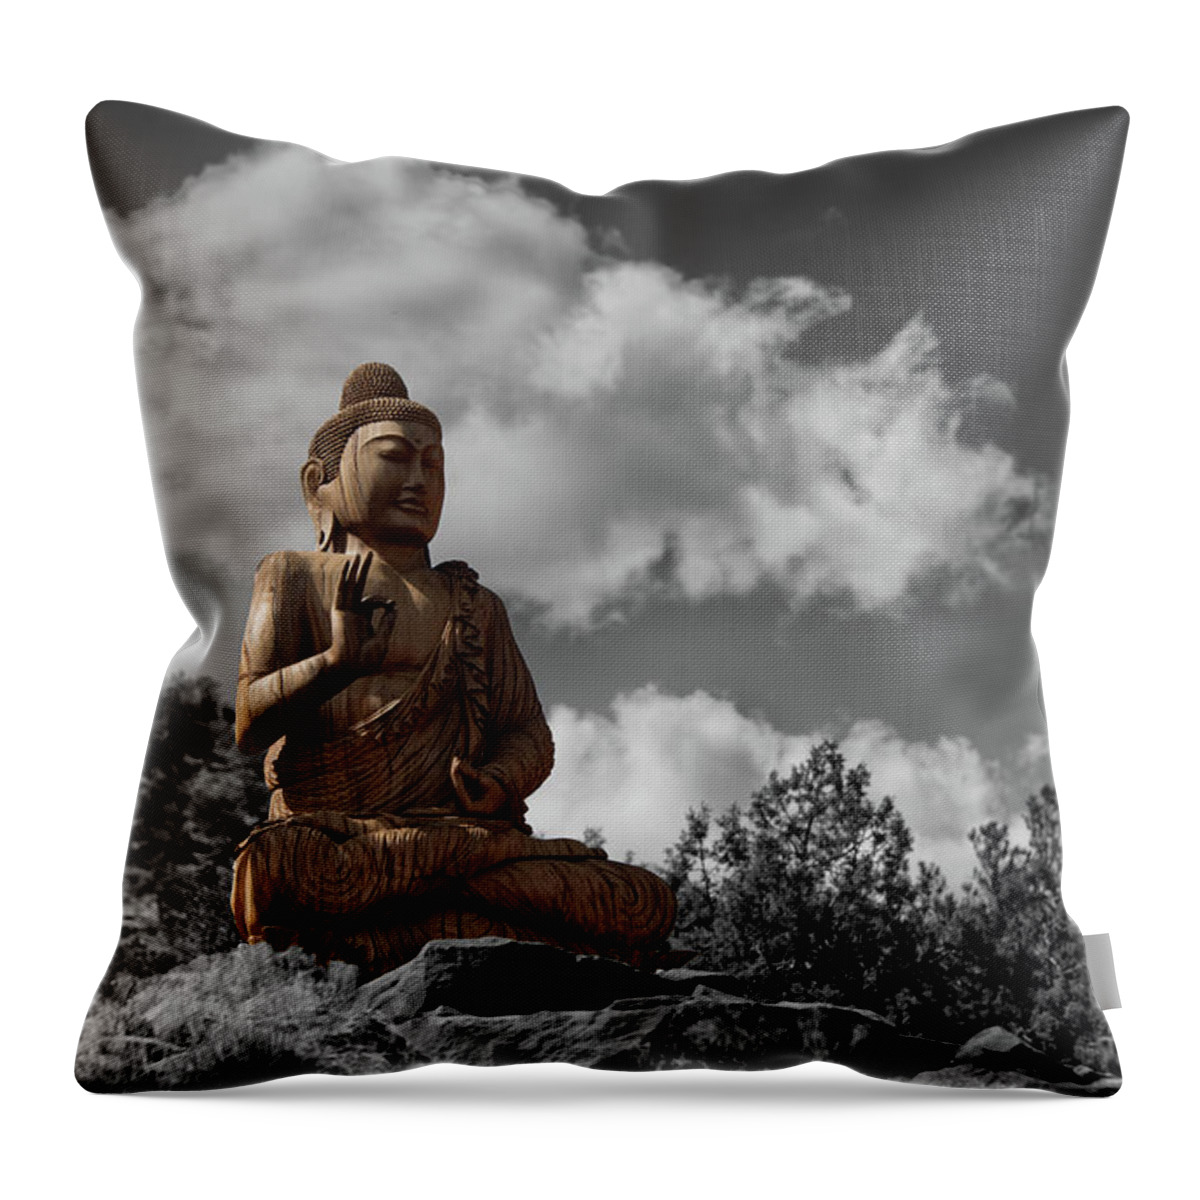 Golden Throw Pillow featuring the photograph Sedona Buddha by Alan Goldberg